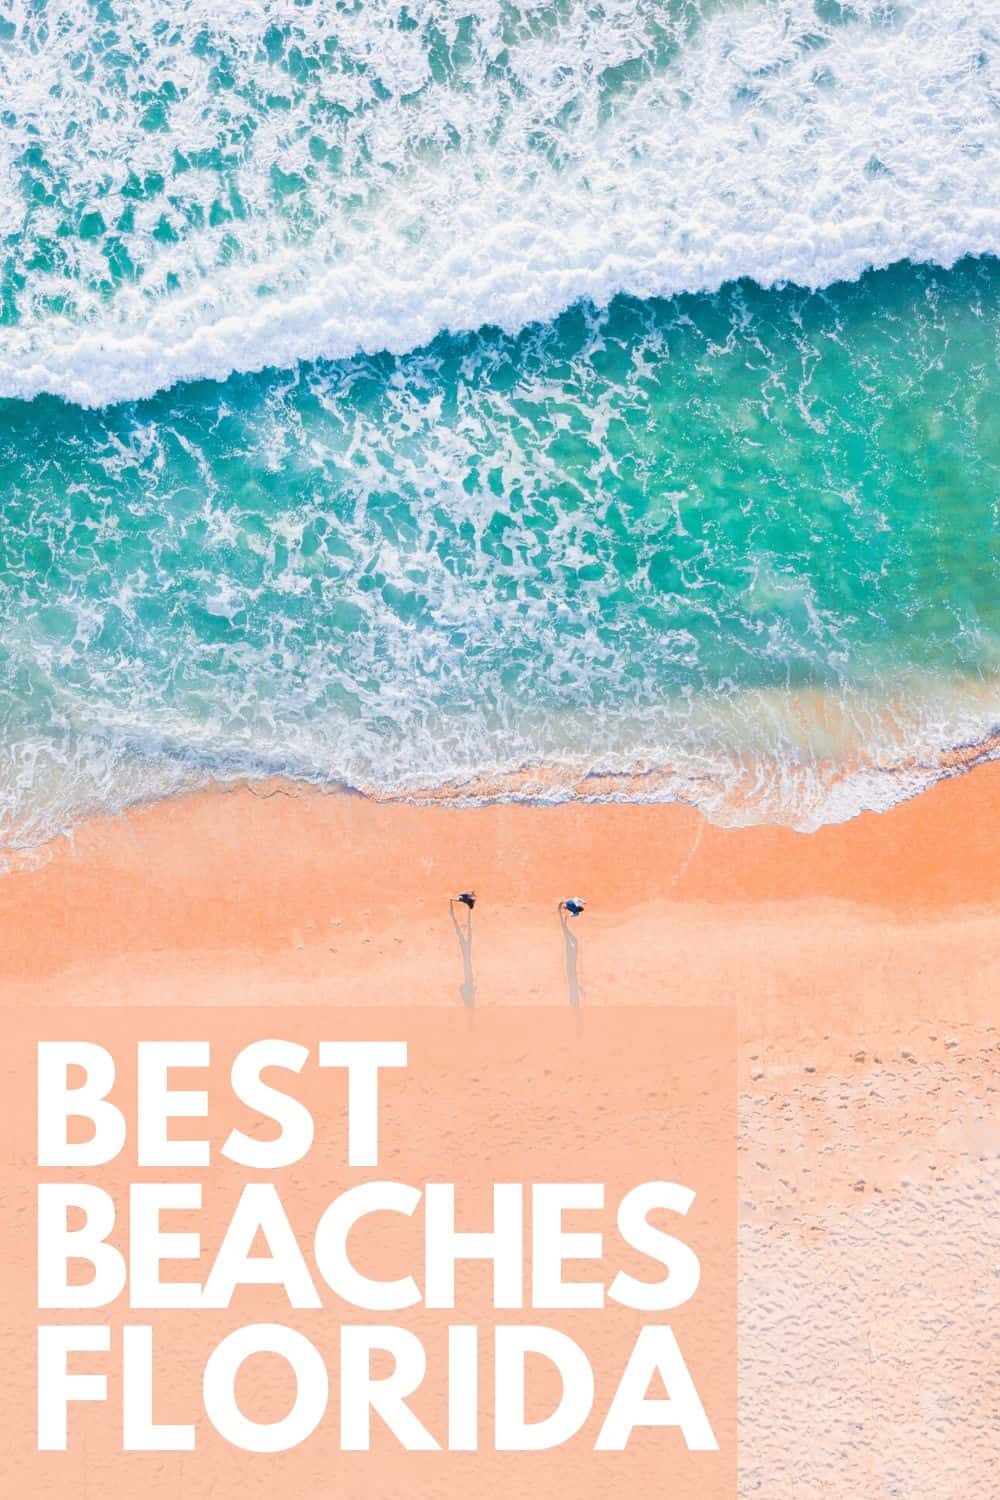 Best beaches in Florida - East & West Coast